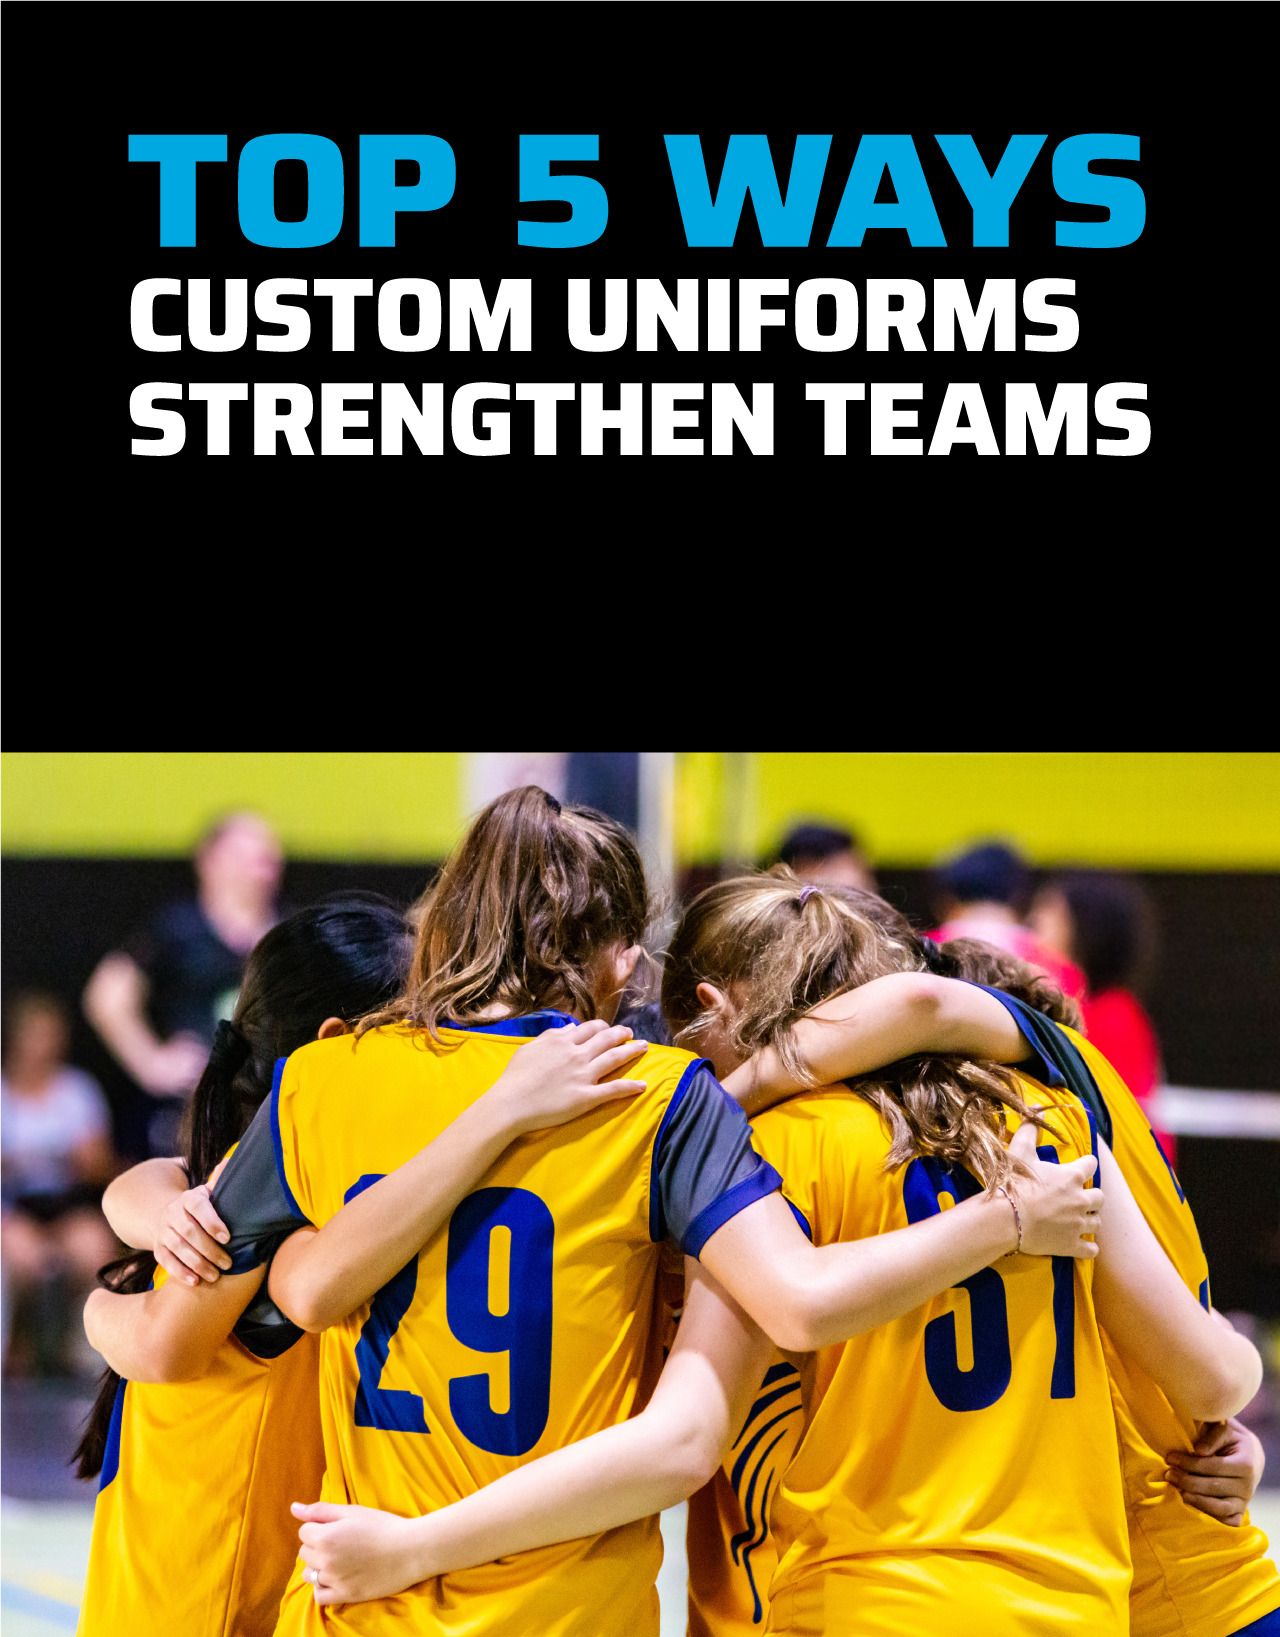 Top 5 Ways Custom Uniforms Strengthen Teams